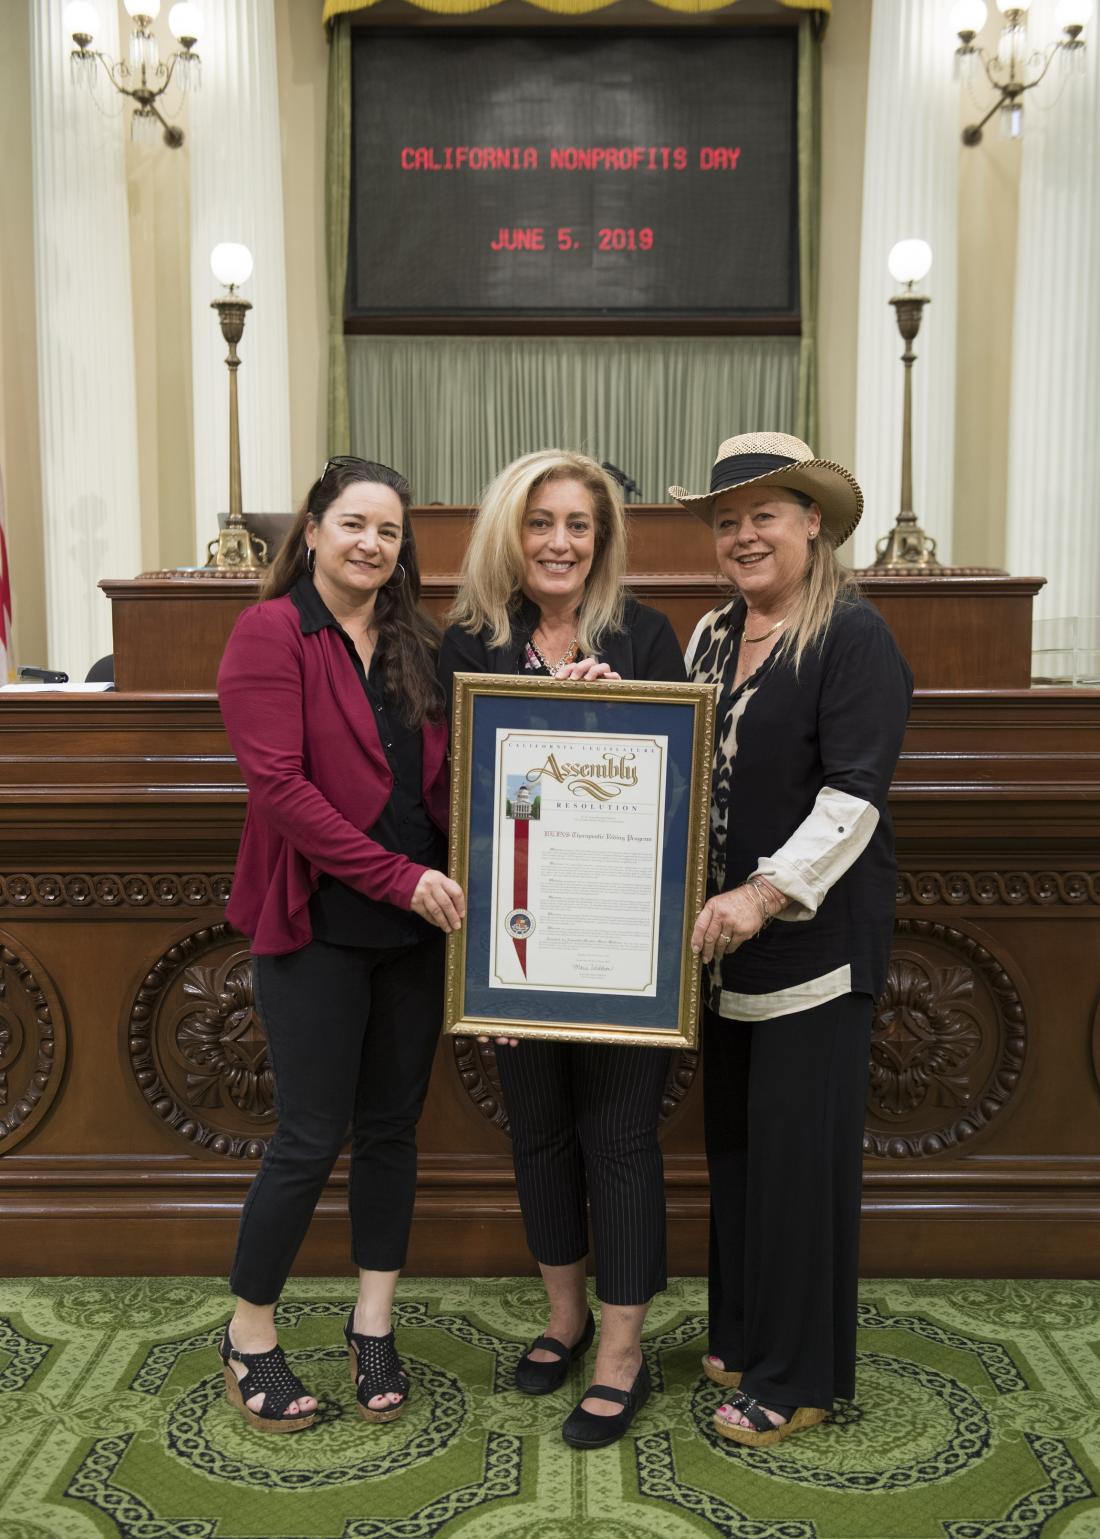 Assemblywoman Waldron Honors REINS Therapeutic Horsemanship Program in Fallbrook on California Nonprofits Day 